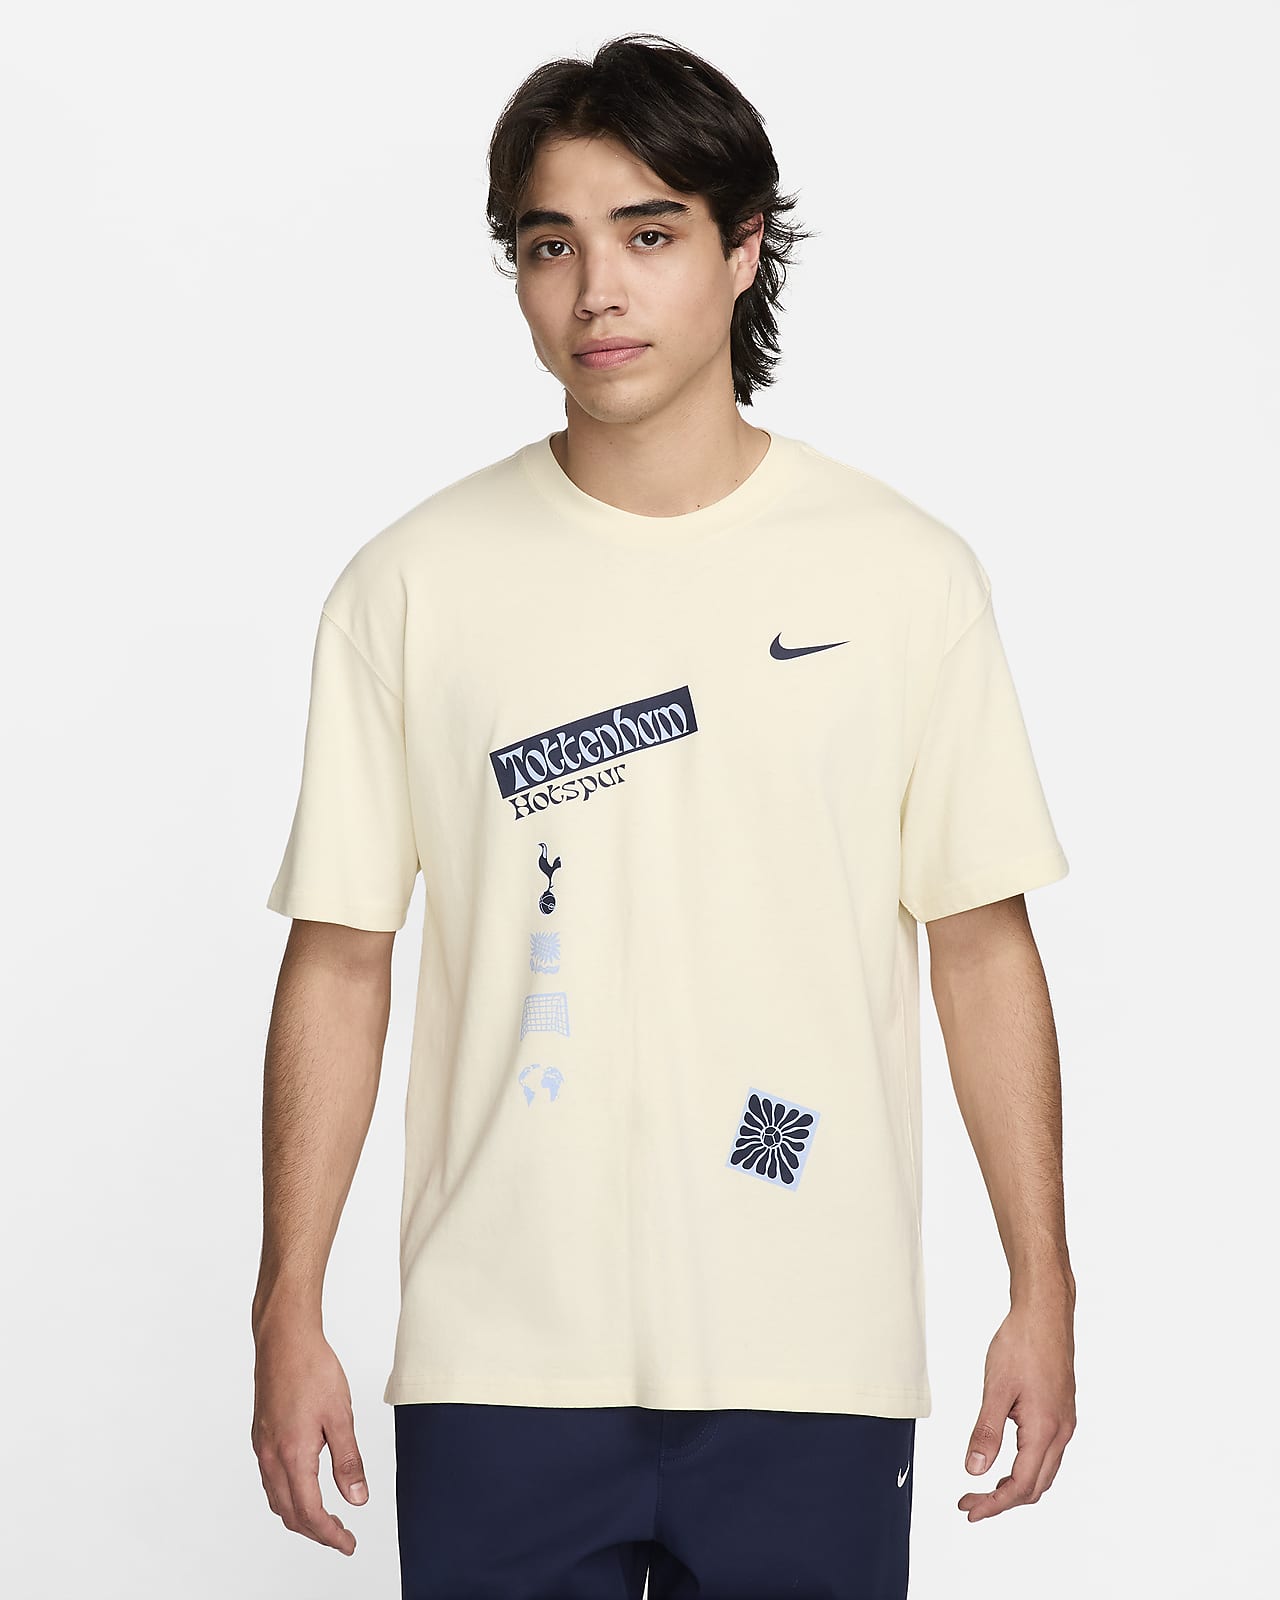 Tottenham Hotspur Men's Nike Soccer Max90 T-Shirt